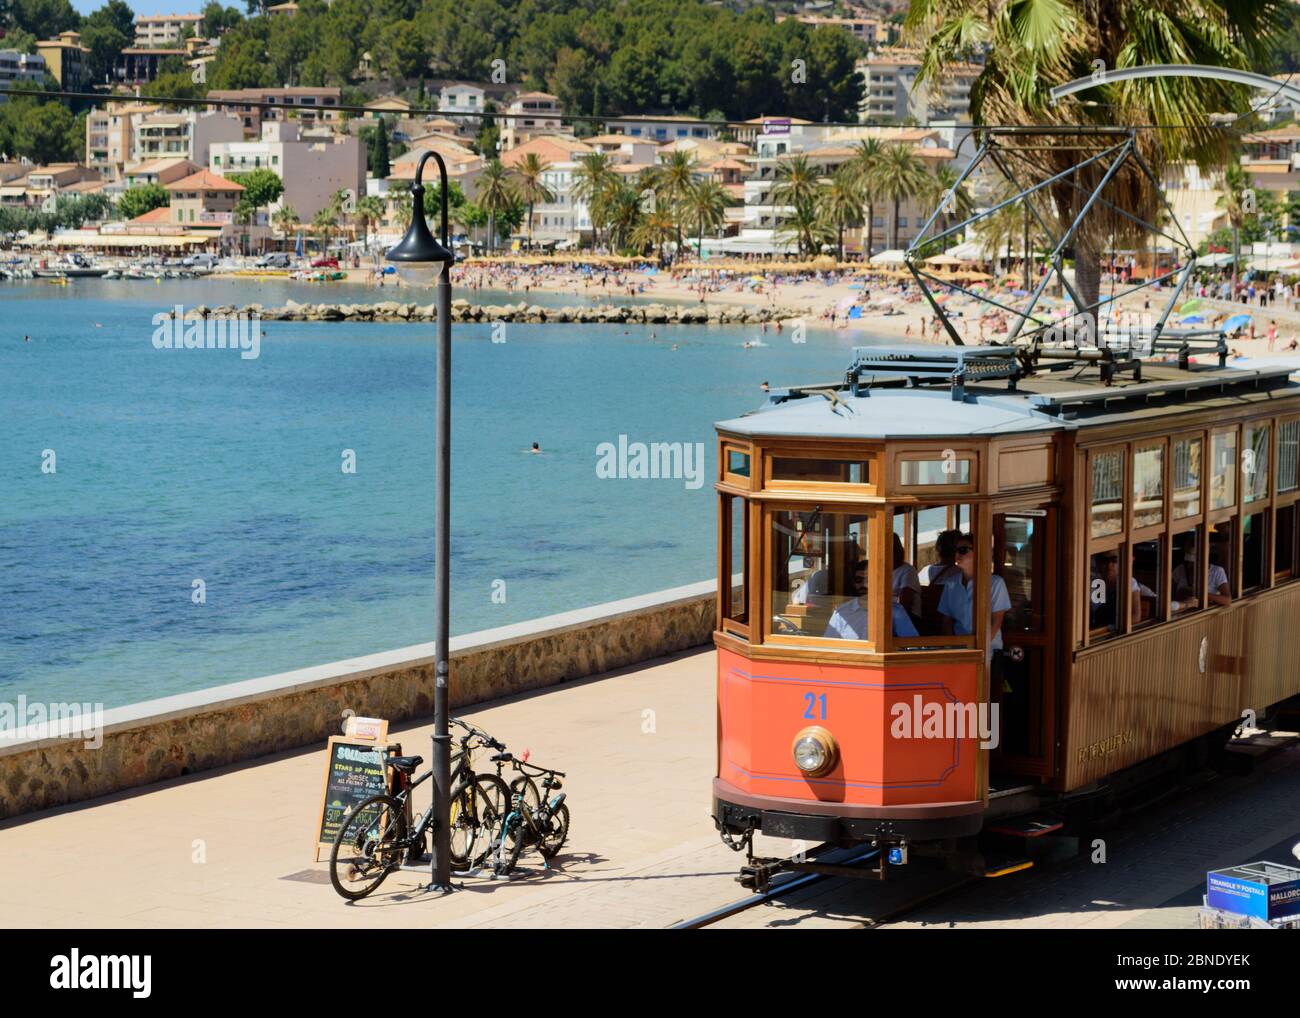 Spain June 18th, 2019 - The classic antique trams of Port Soller, a popular tourist destination in Majorca Stock Photo